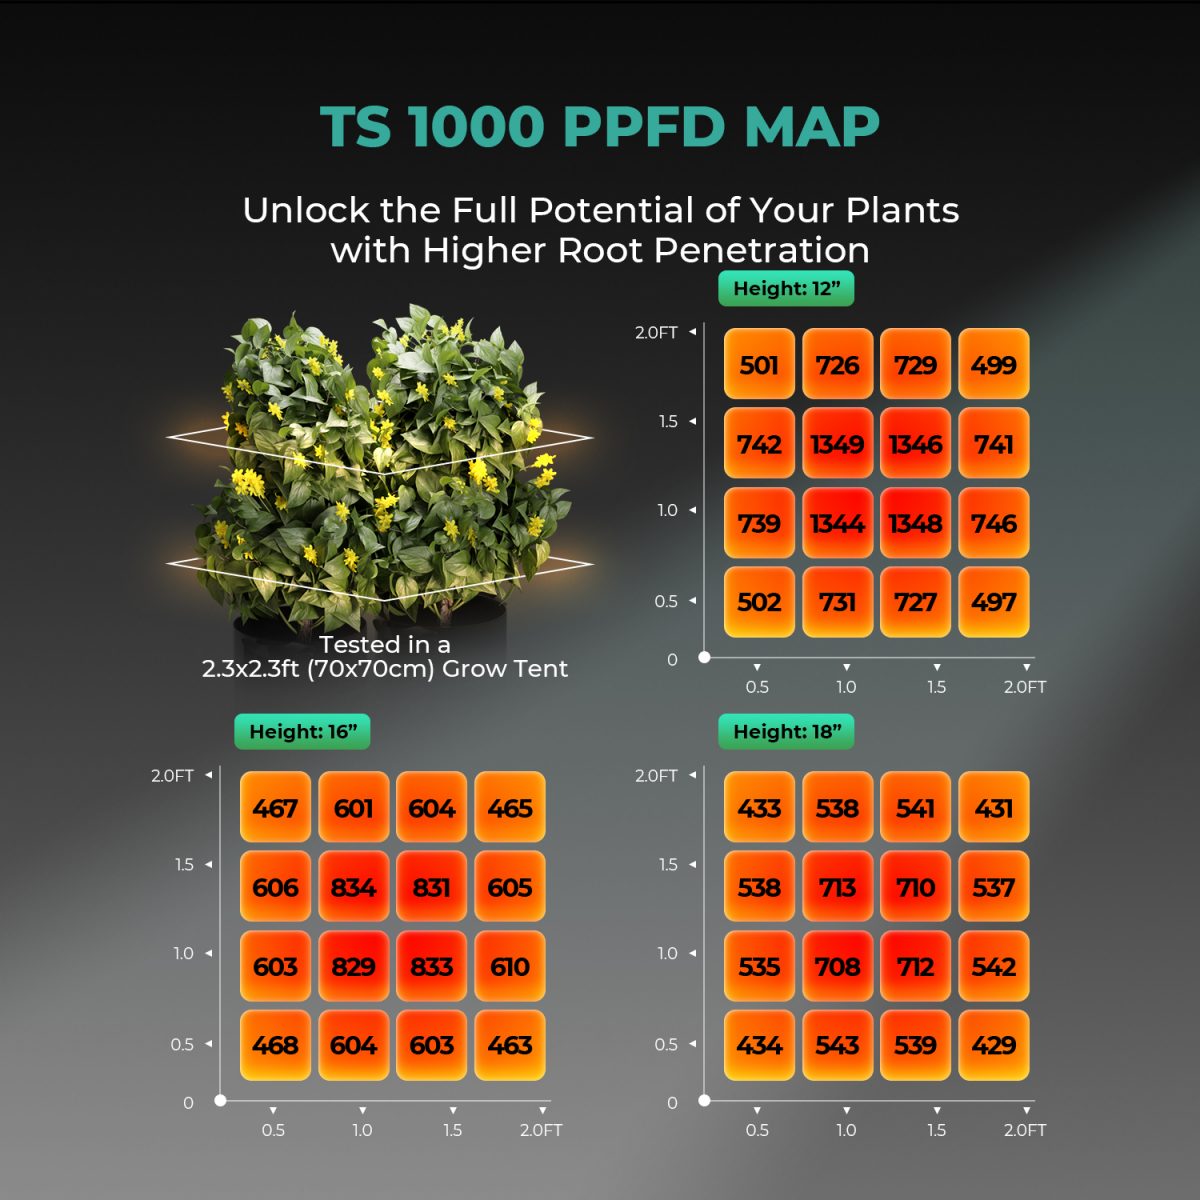 TS 1000 PPFD MAP